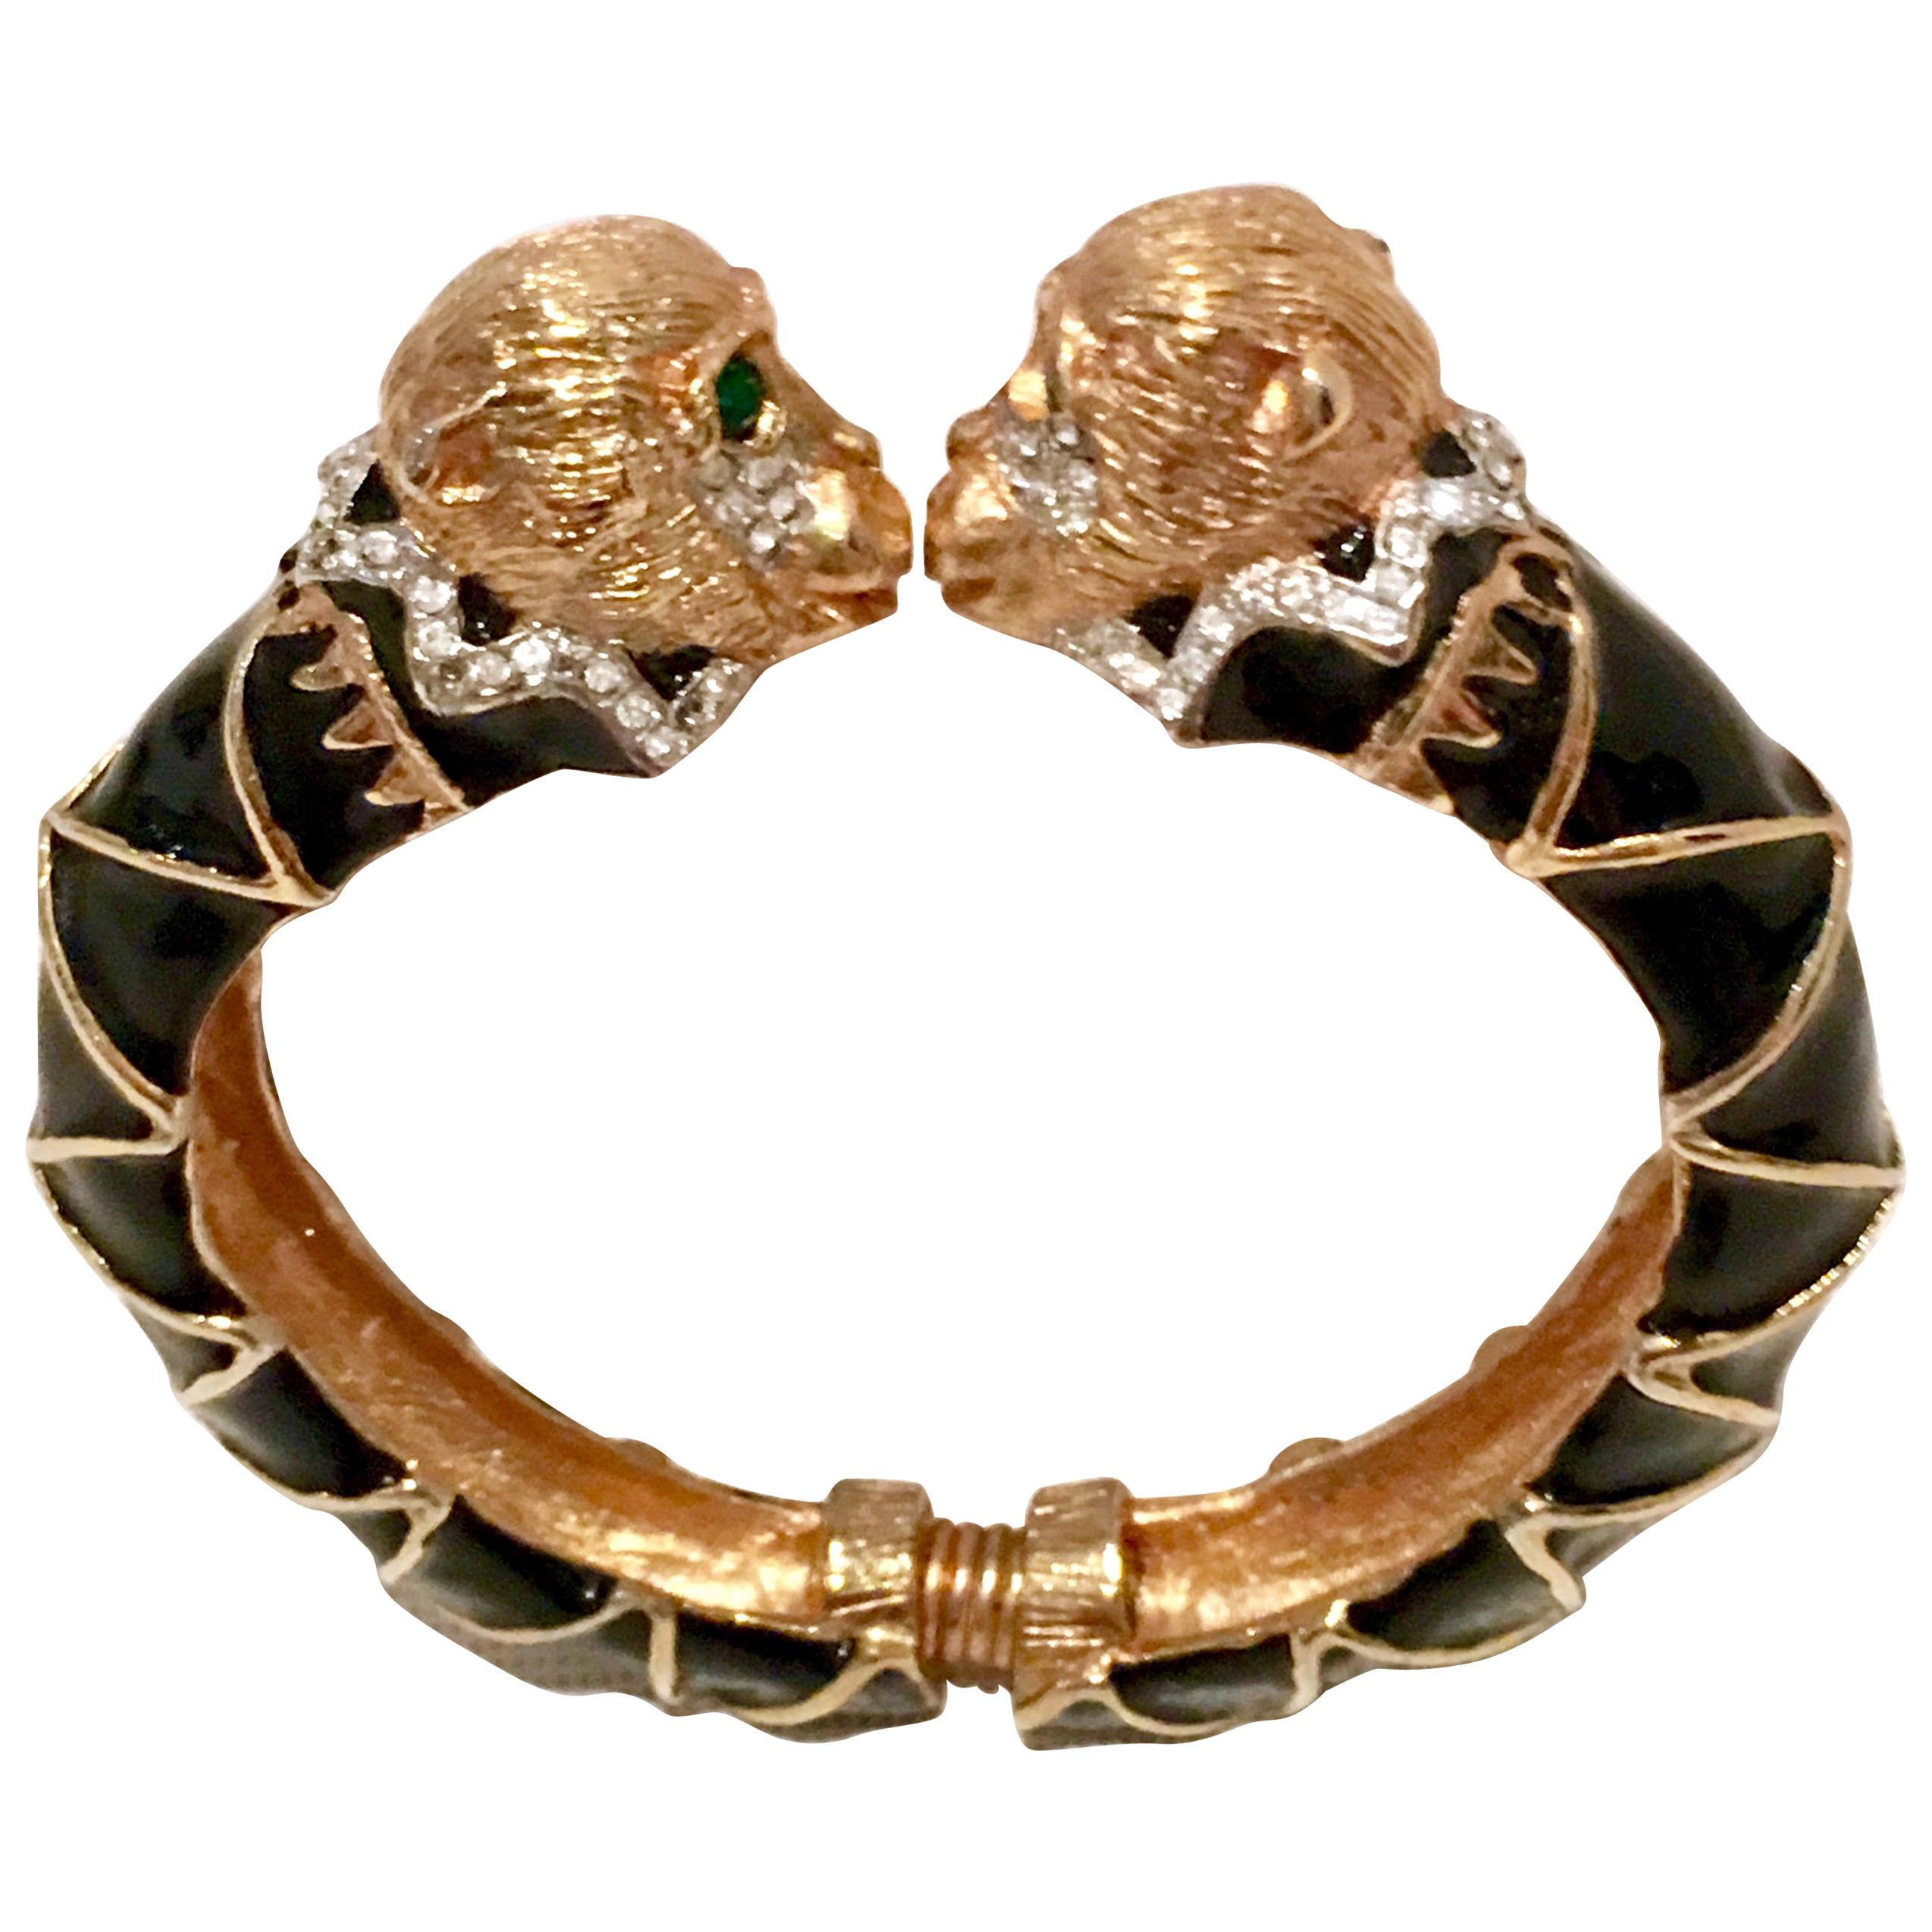 Contemporary Gold Enamal & Swarovski Crystal "Kissing Monkey" Bracelet By KJL